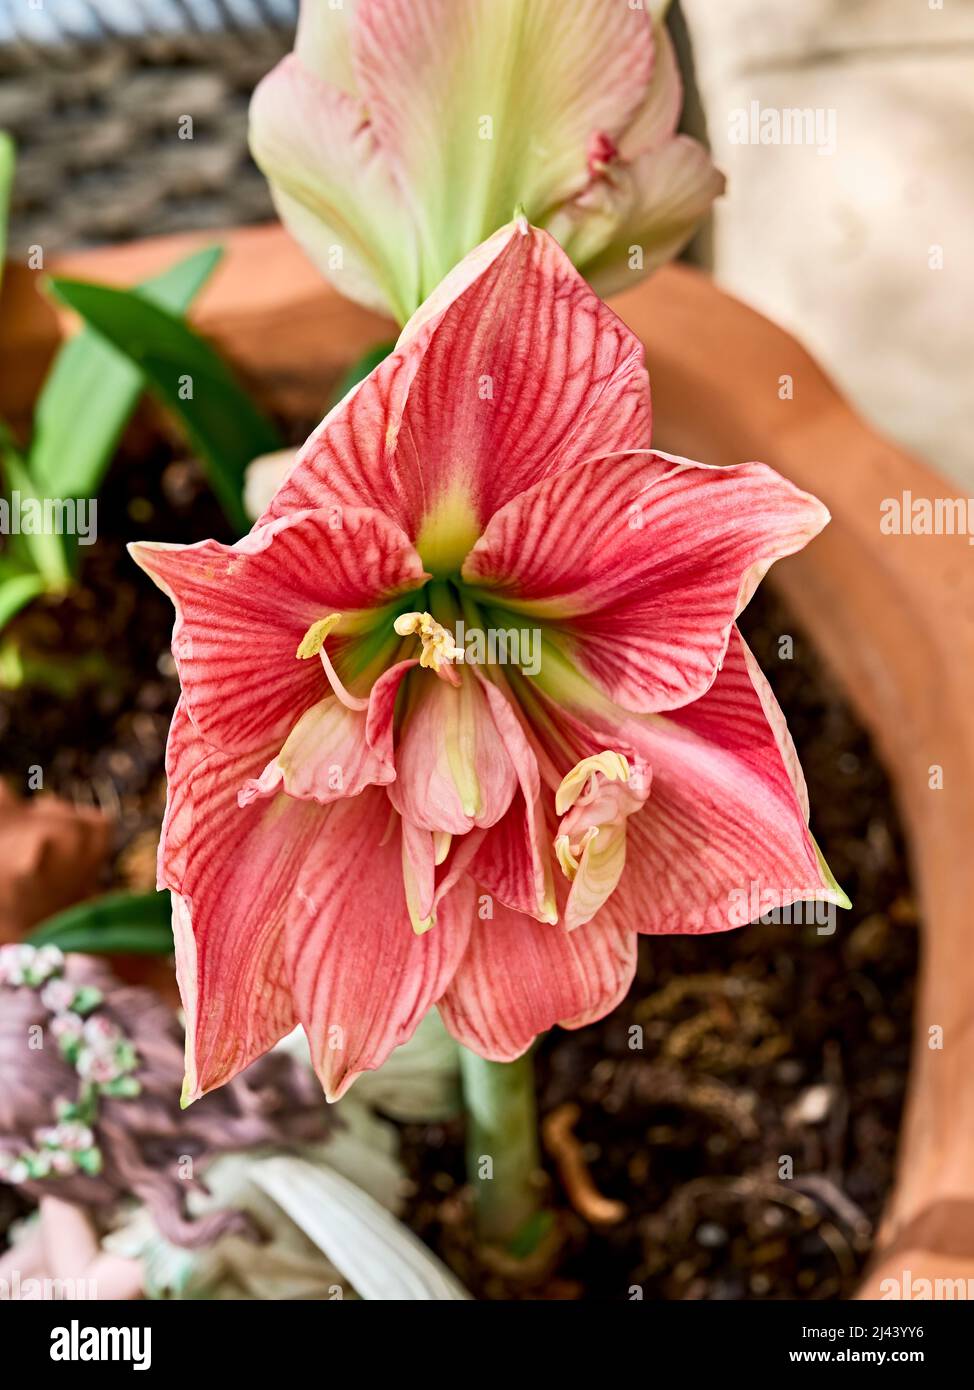 Pink Lilium longiflorum or Easter lily in bloom or blooming flower. Stock Photo